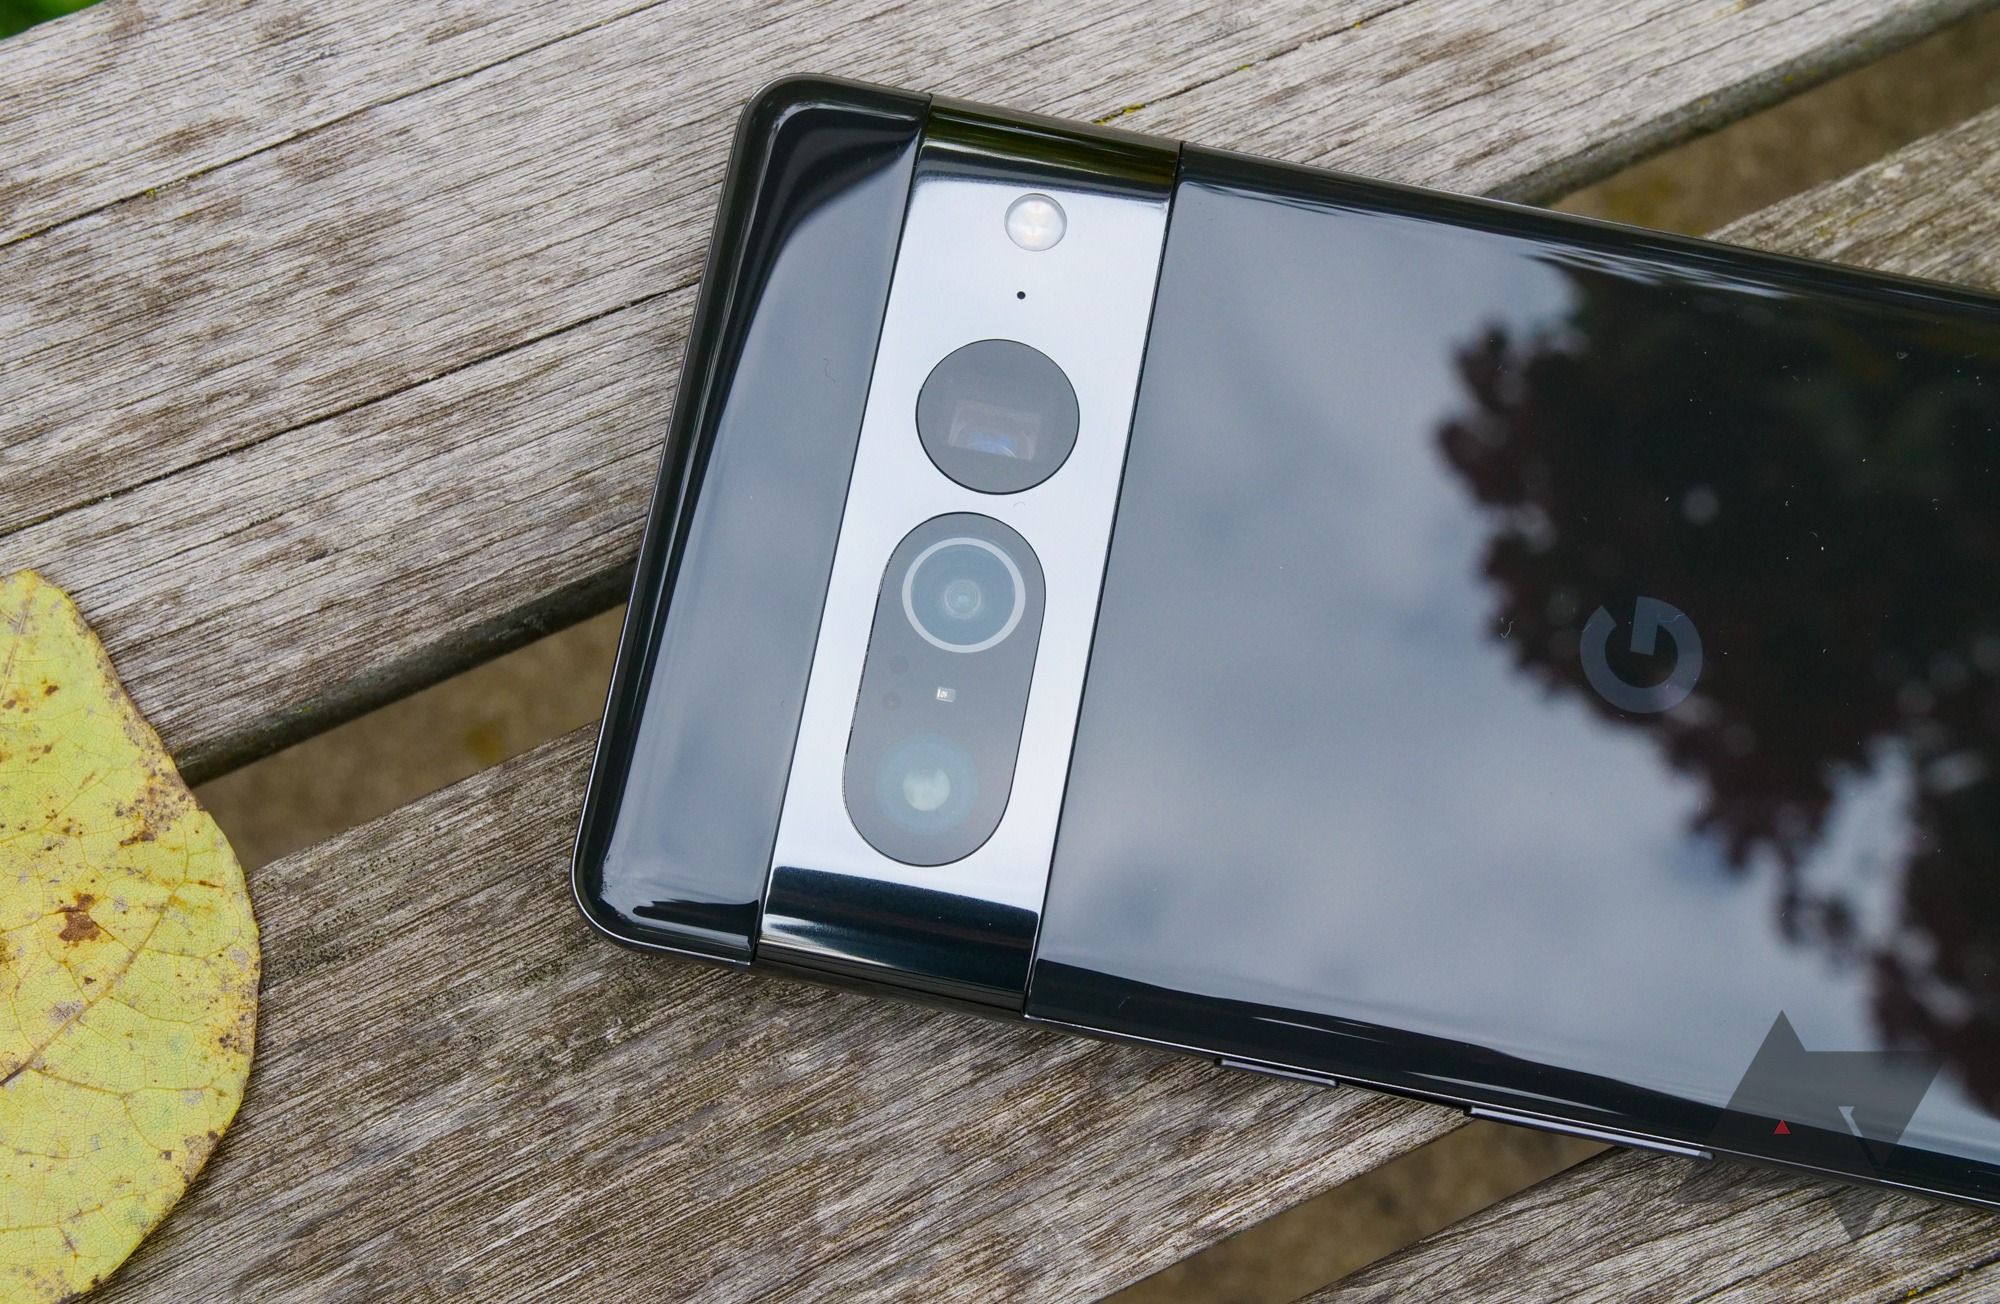 The Google Pixel 7 Pro smartphone